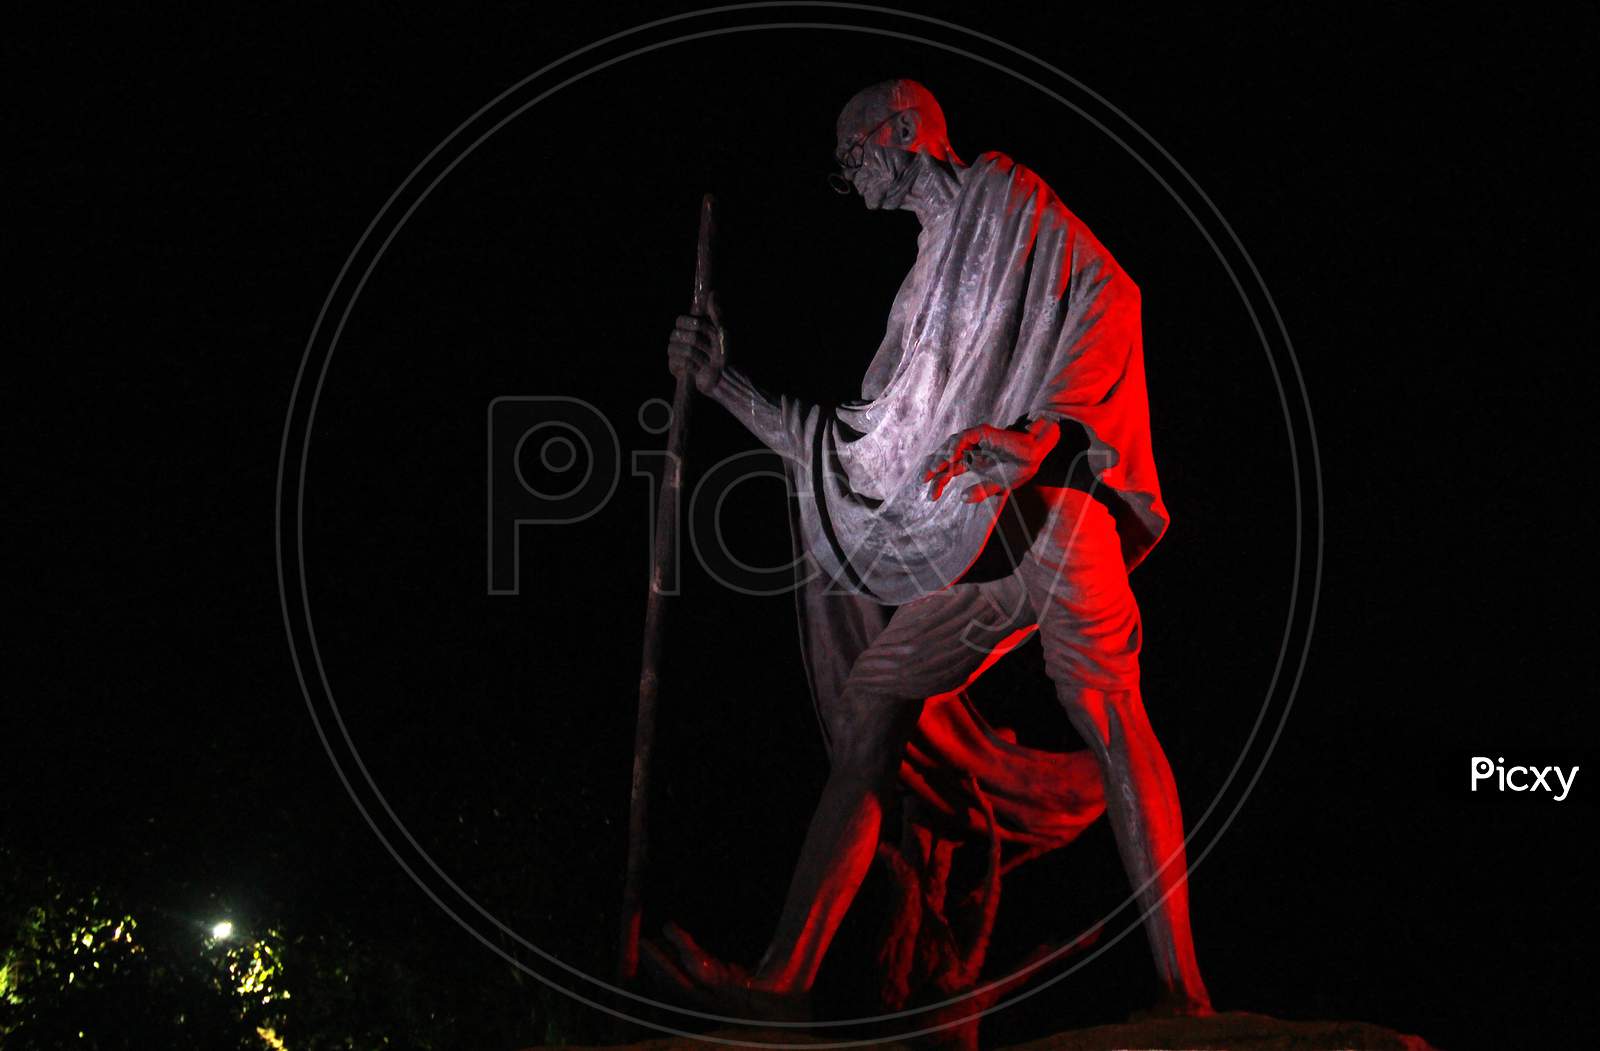 Sculpture named Gyarah Murti is pictured in New Delhi